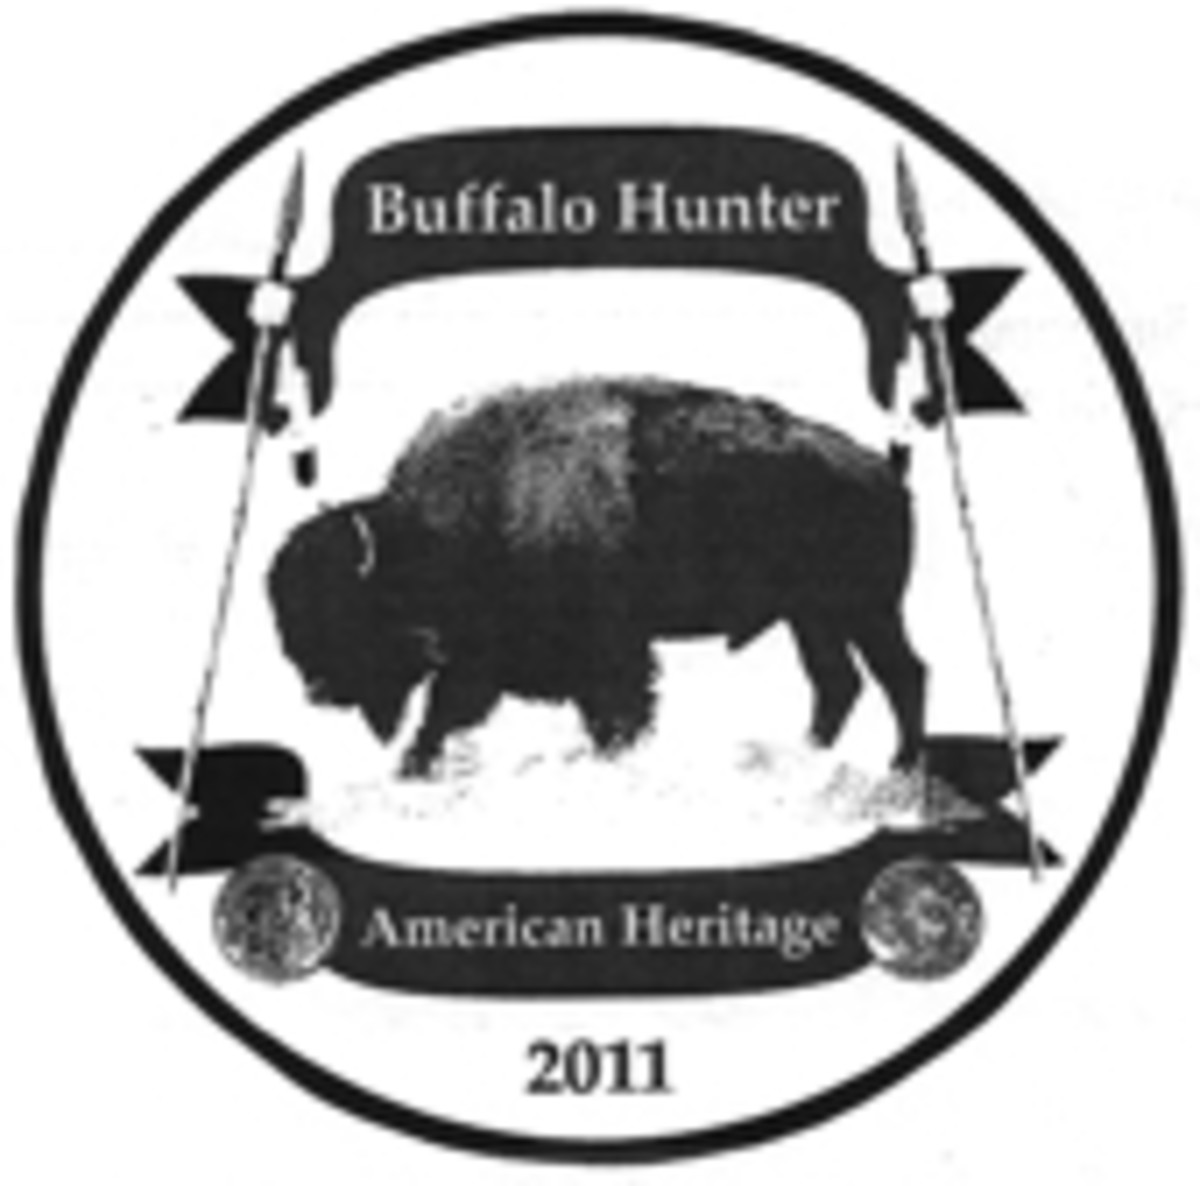 Buffalo Hunter Medal